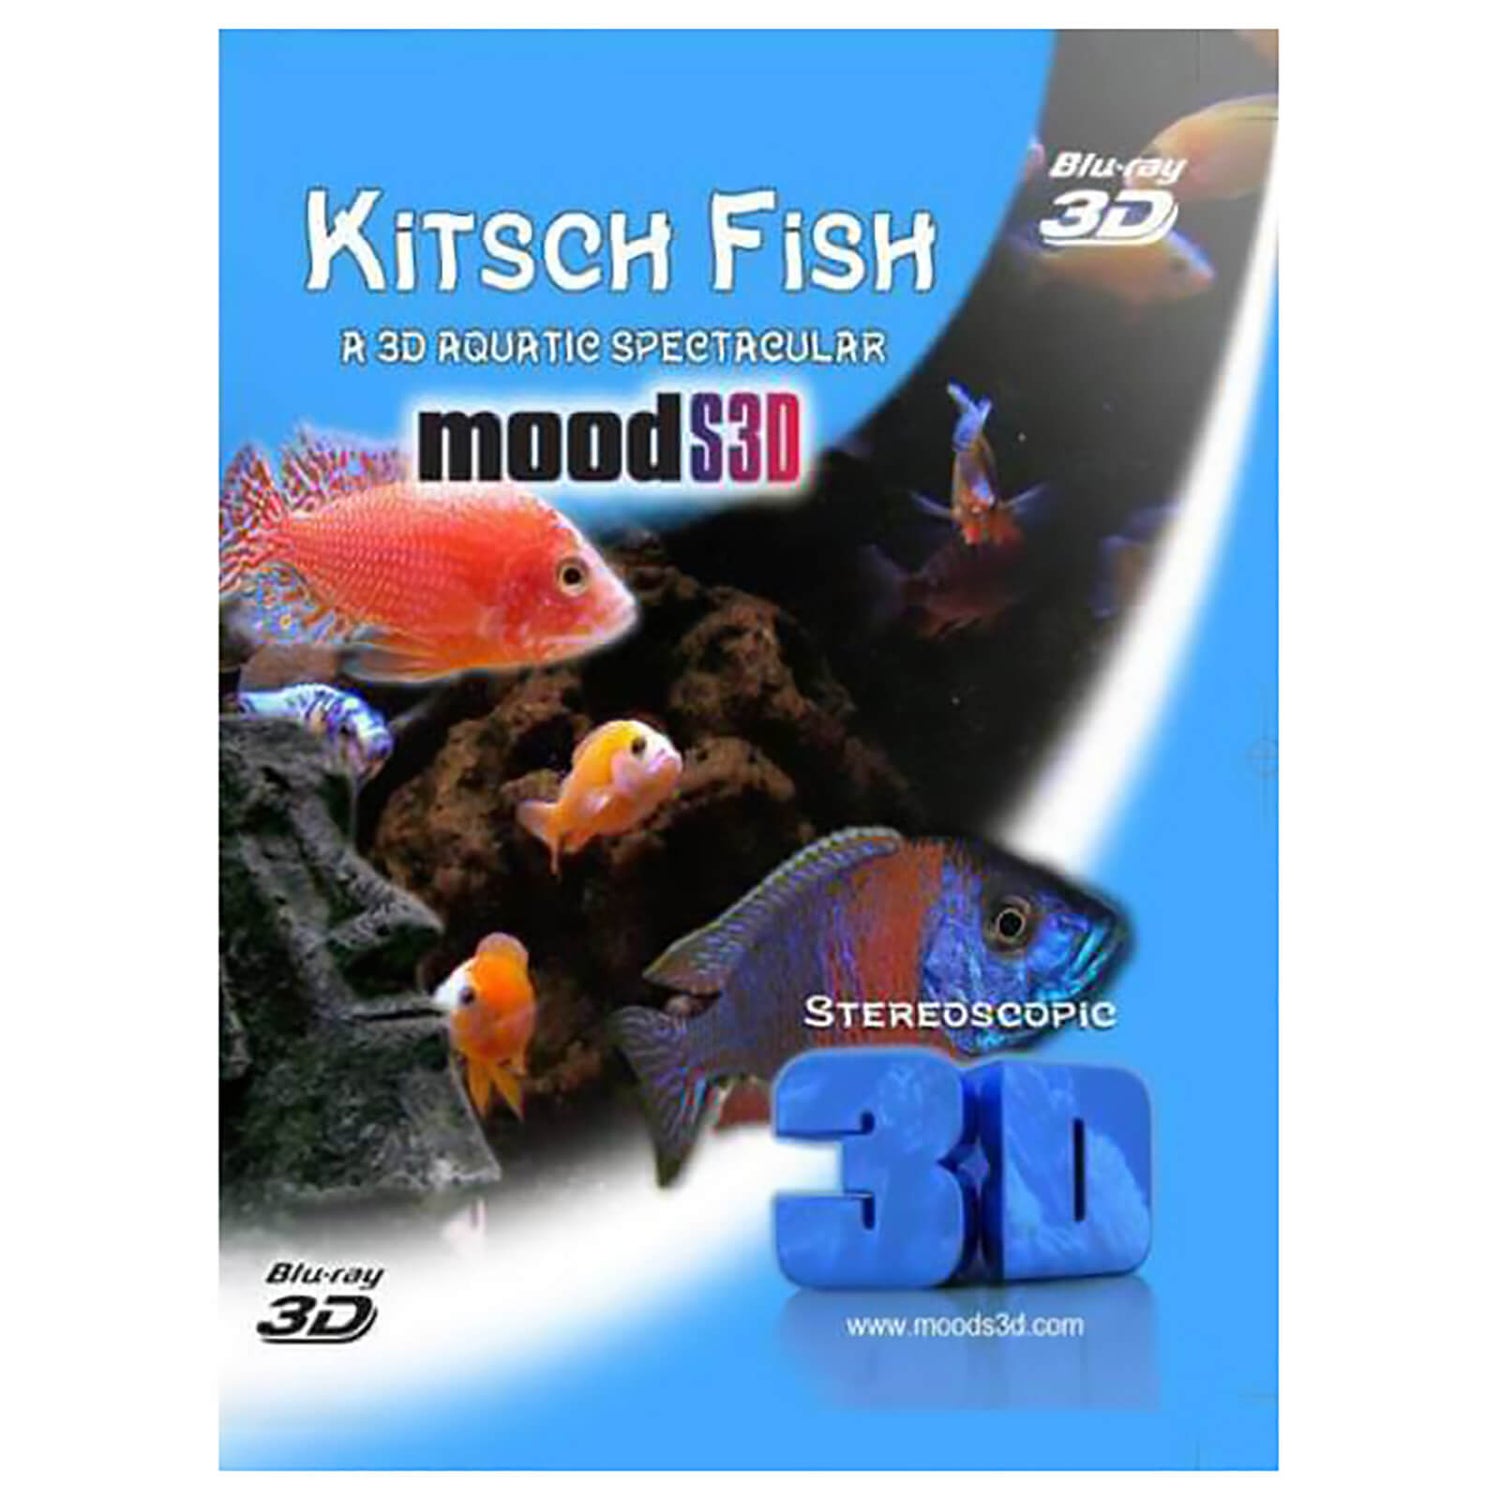 Kitsch Fish (y compris Blu-Ray 3D et 2D)